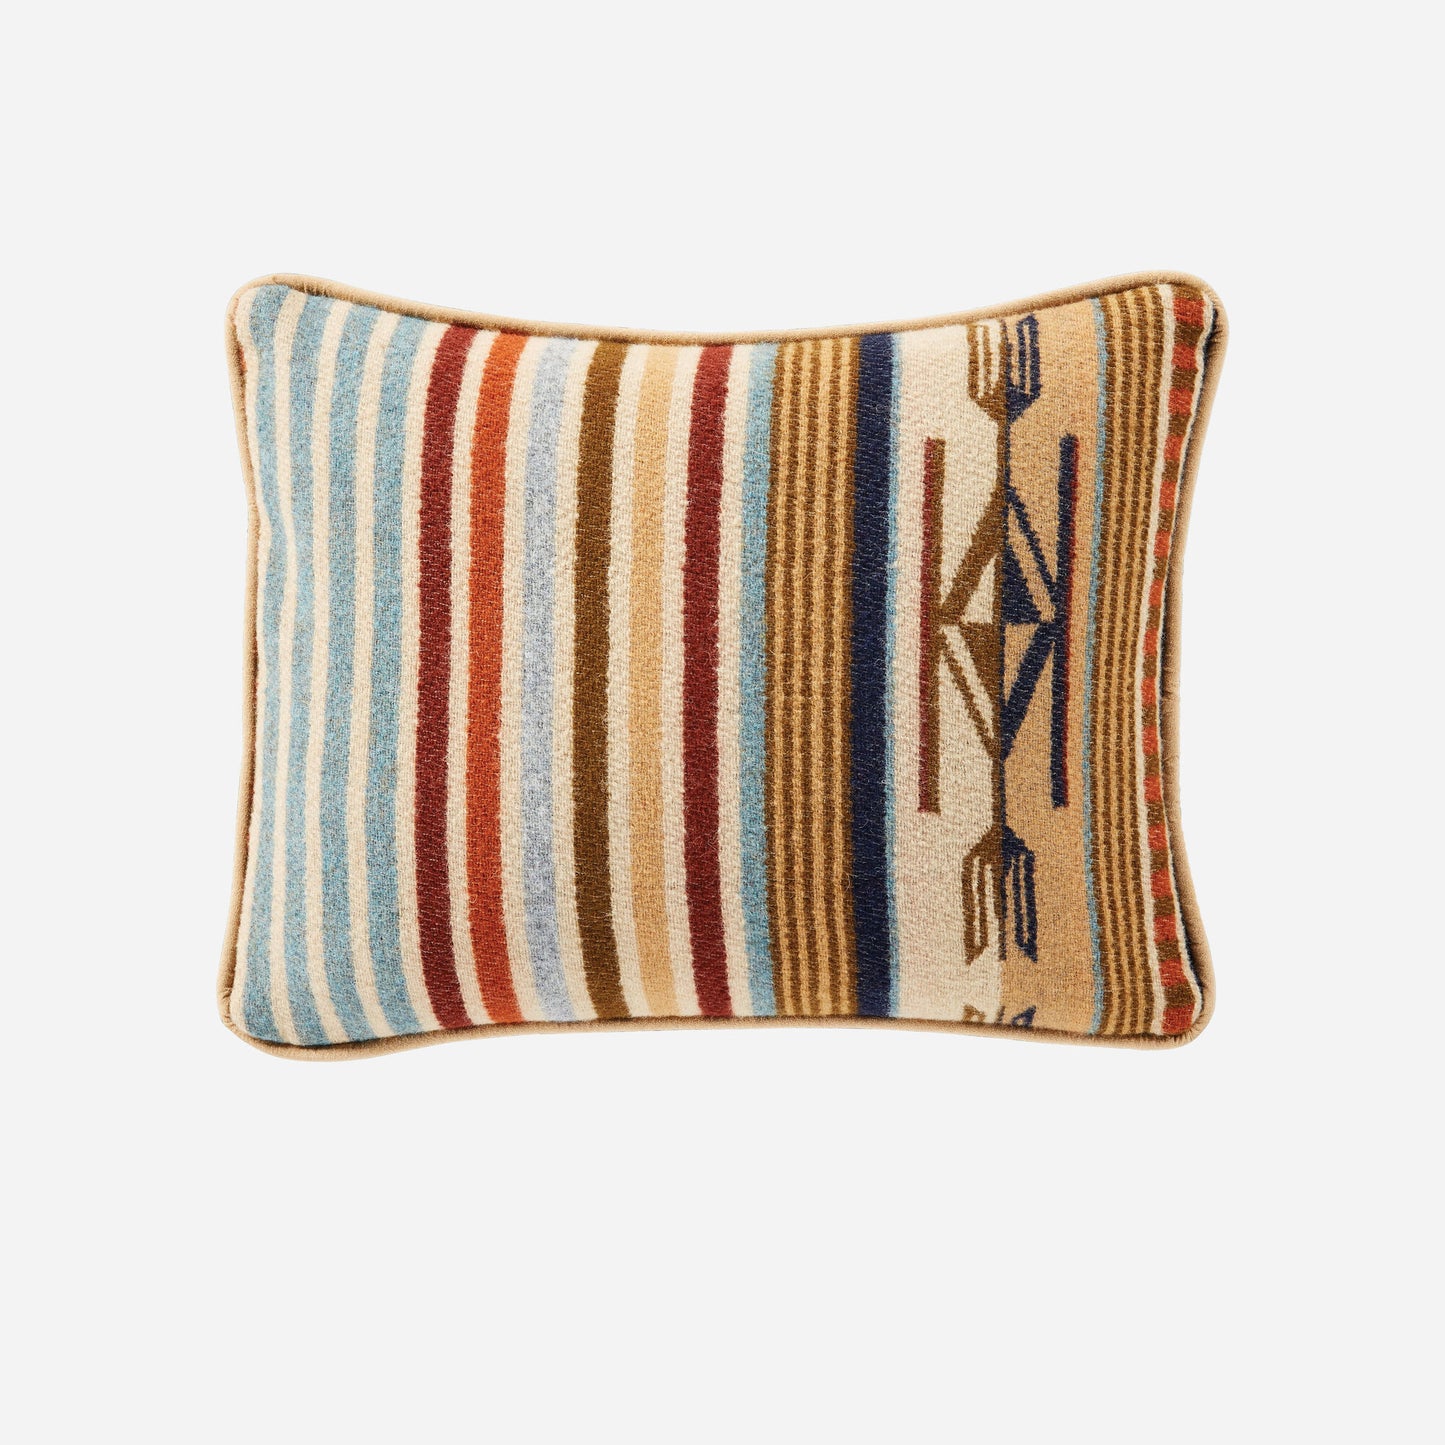 pendleton woolen mills chimayo throw pillow harvest tan strip couch toss earth tones